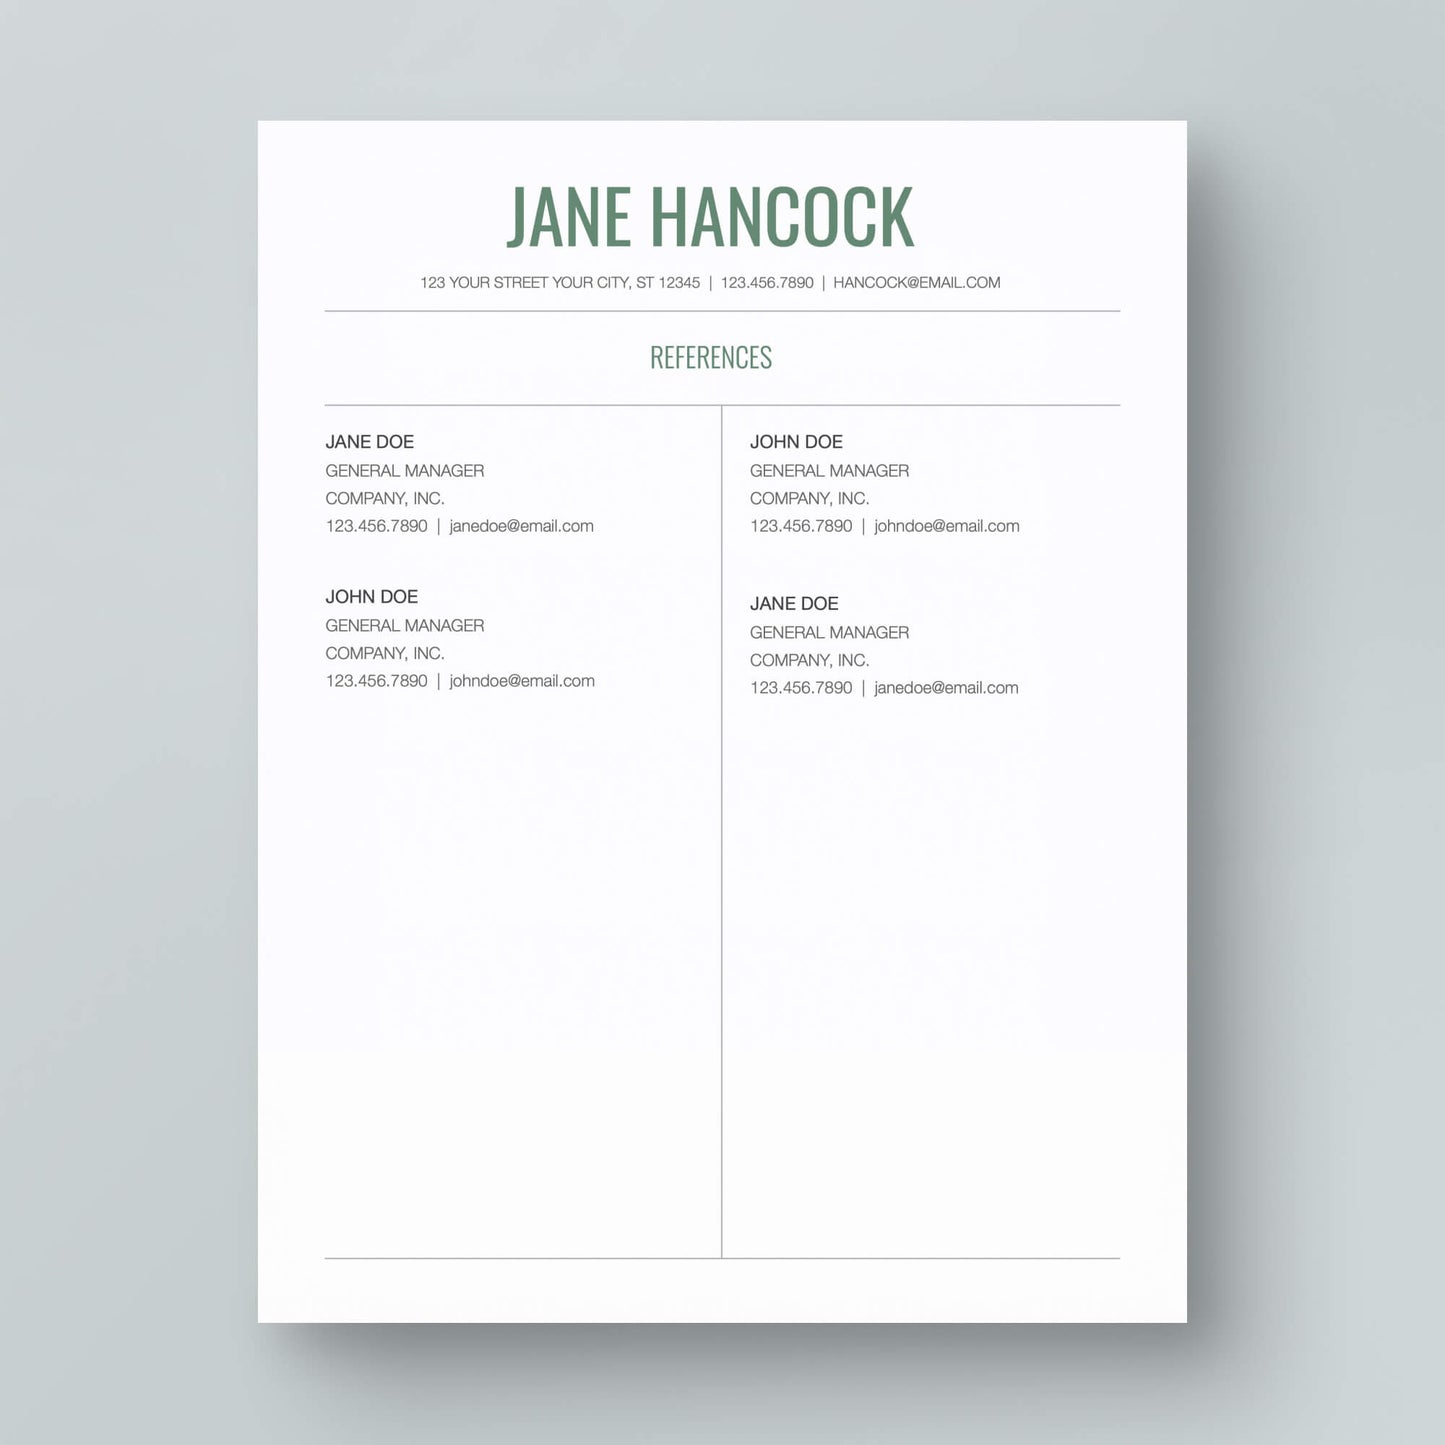 Resume Template: Jane Hancock - MioDocs